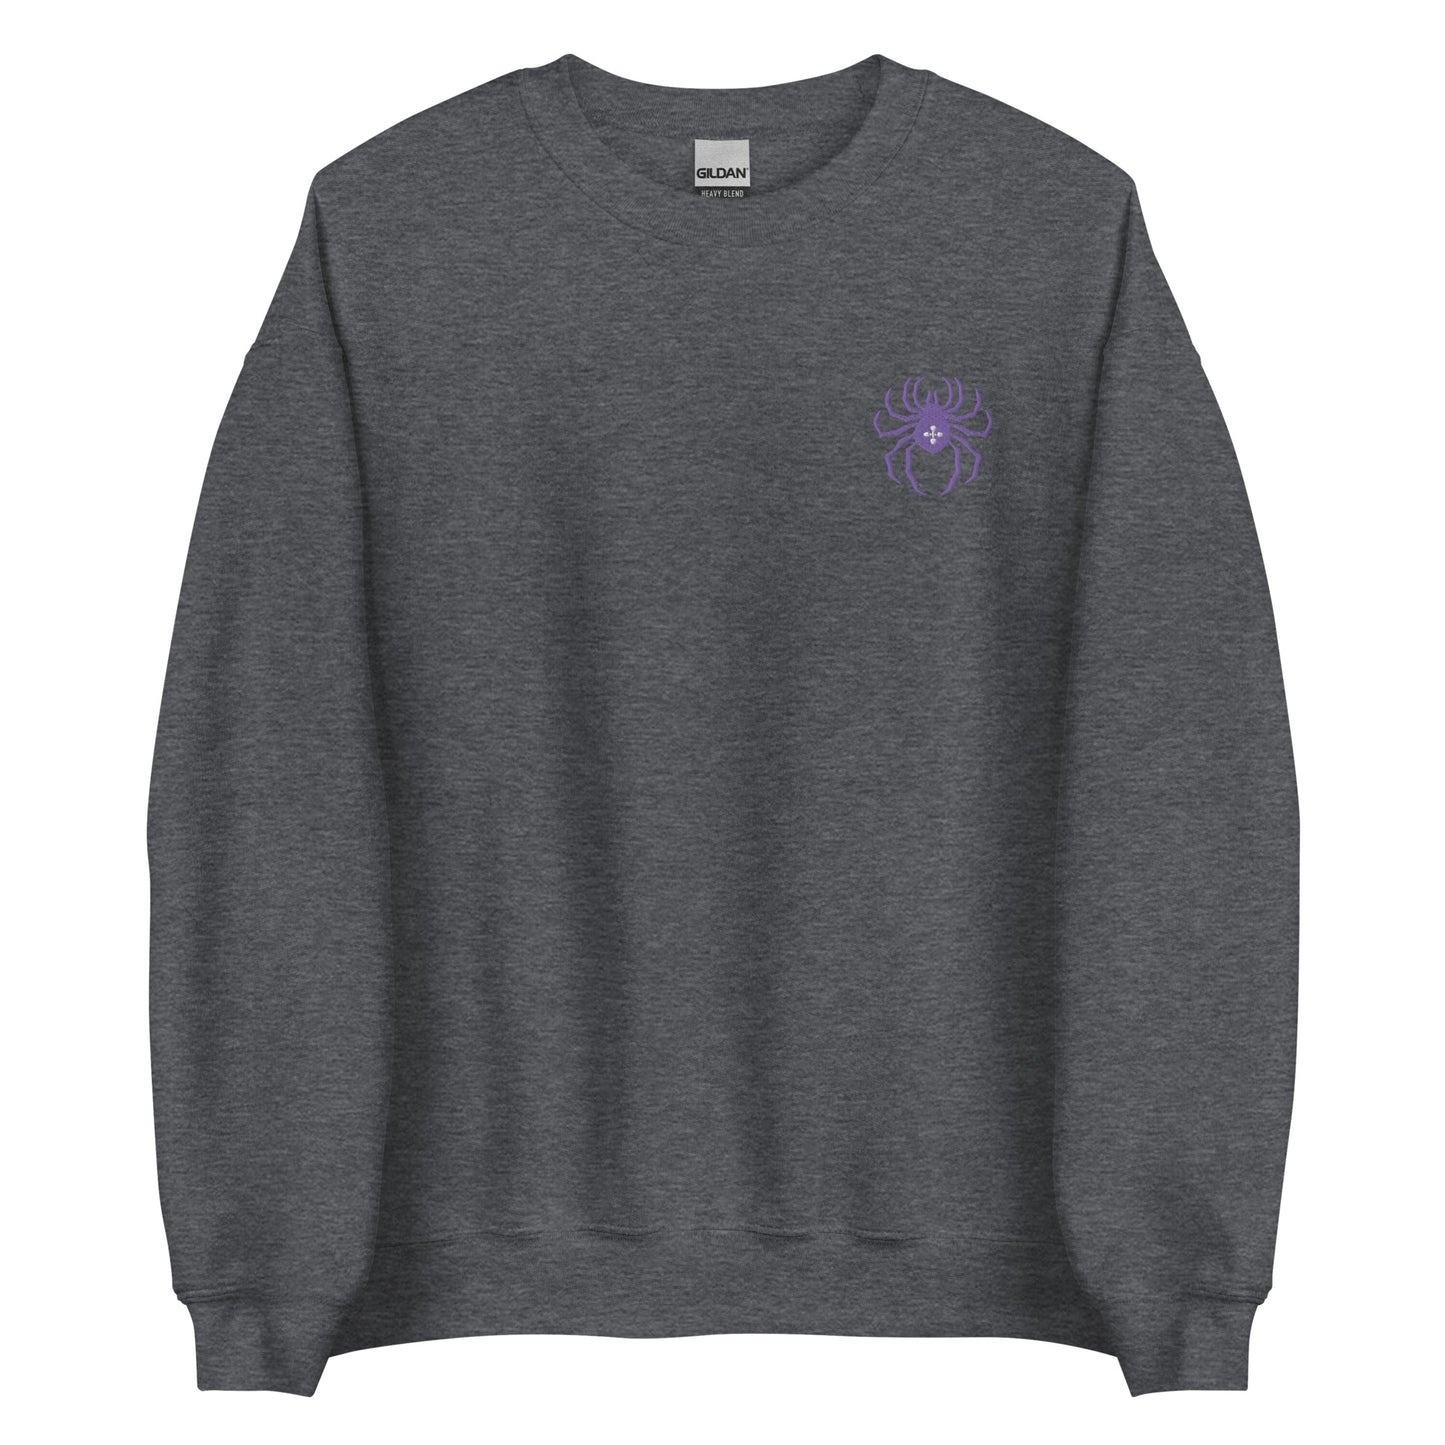 Phantom Spider Troop Sweatshirt Embroidered